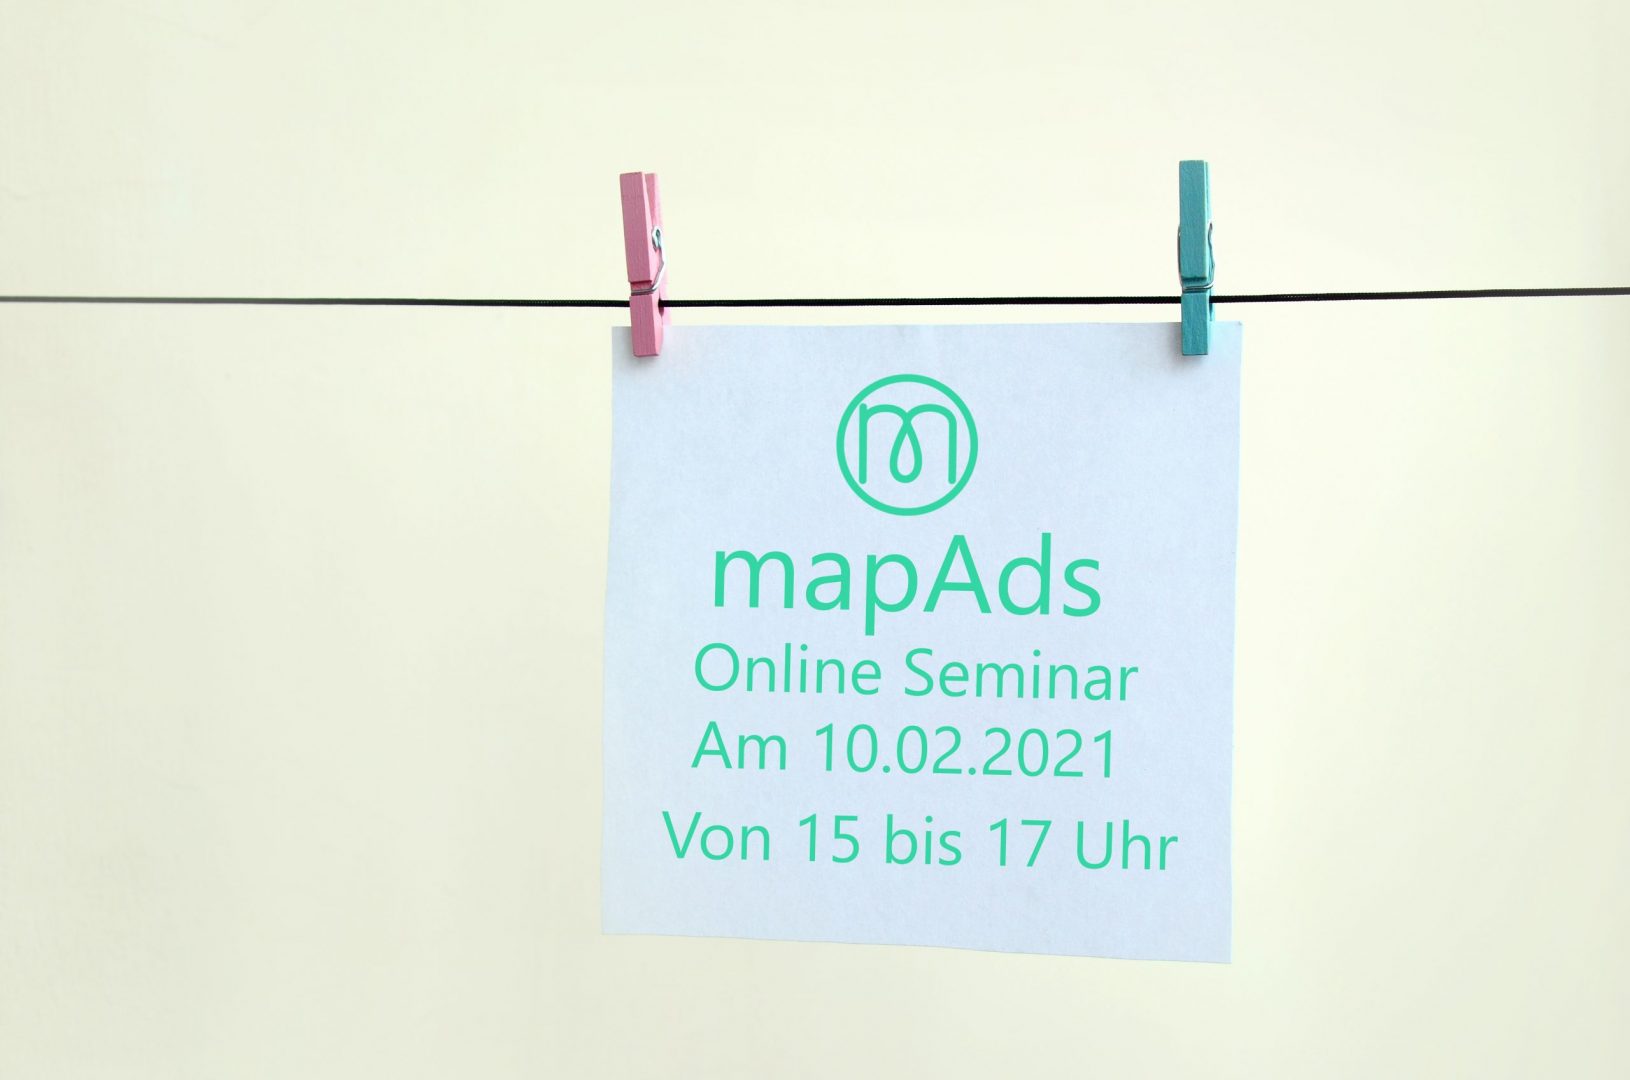 mapAds Online seminar